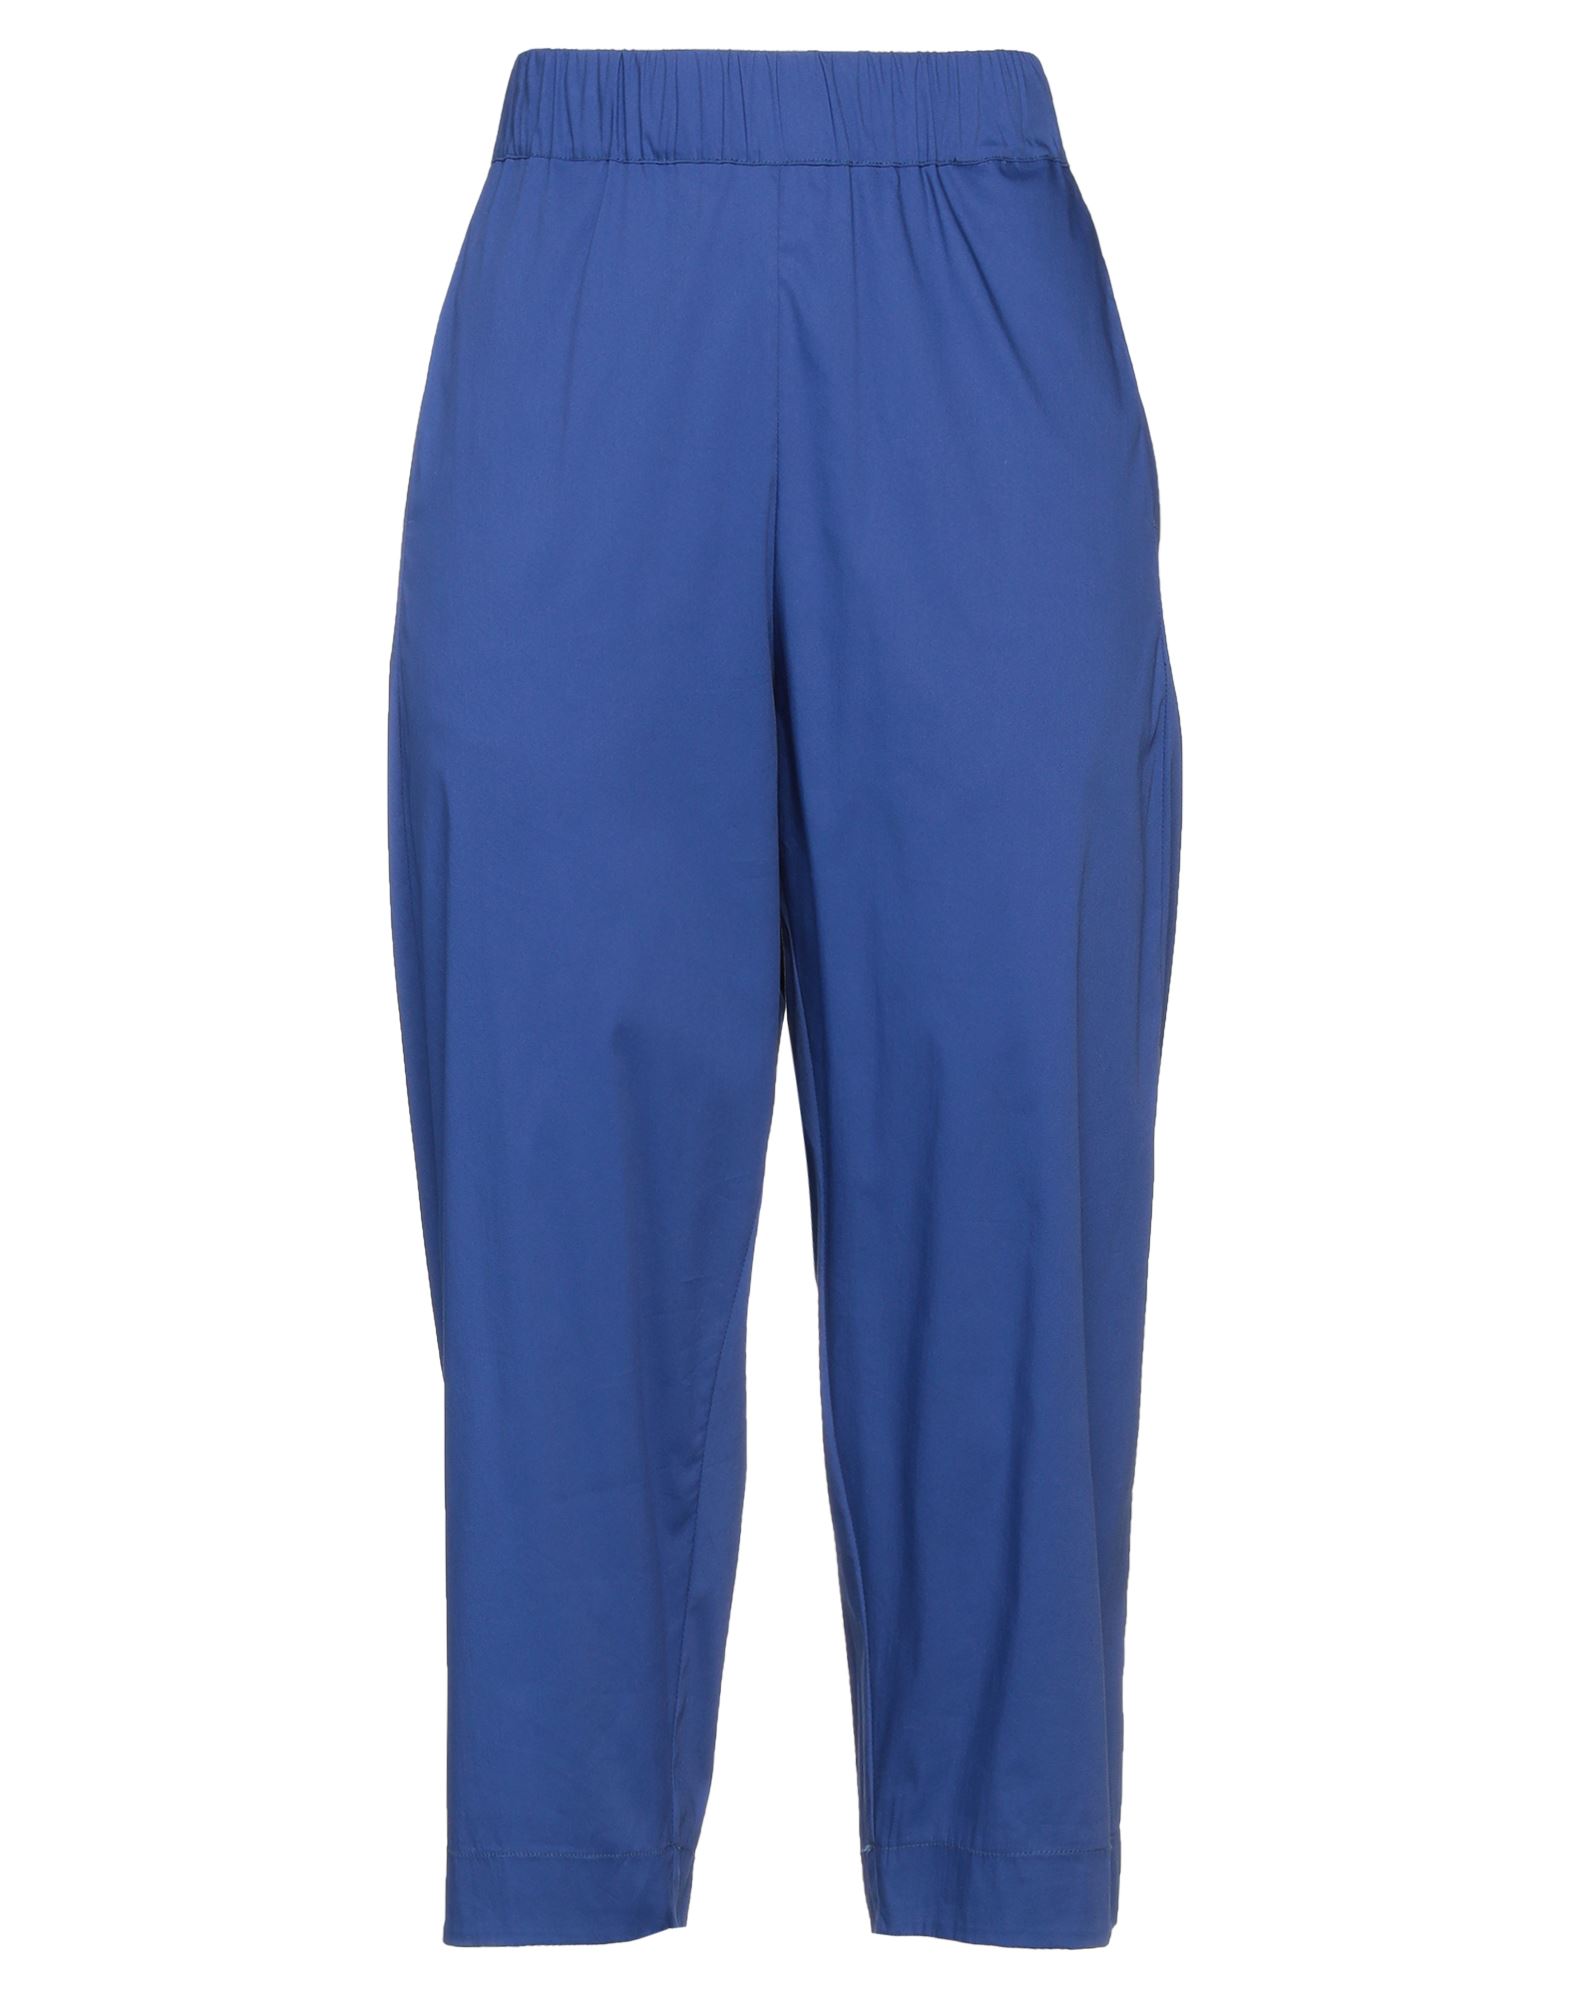 Collection Privèe Collection Privēe? Woman Cropped Pants Bright Blue Size 6 Cotton